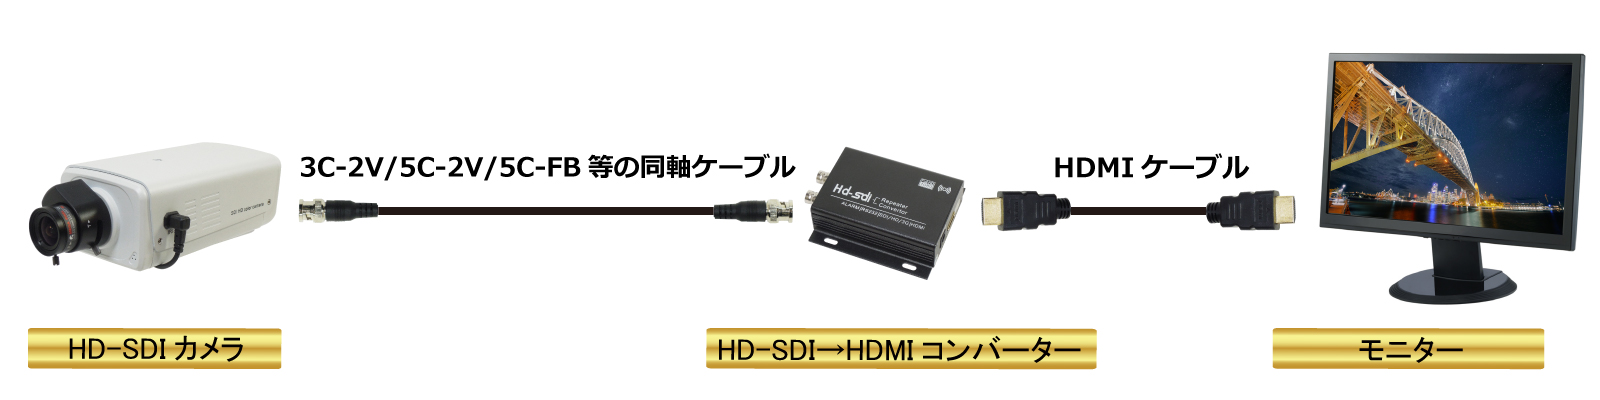 HD-CCTV/HD-SDI防犯・監視カメラシステム接続イメージ[カメラ1台をライブ監視]